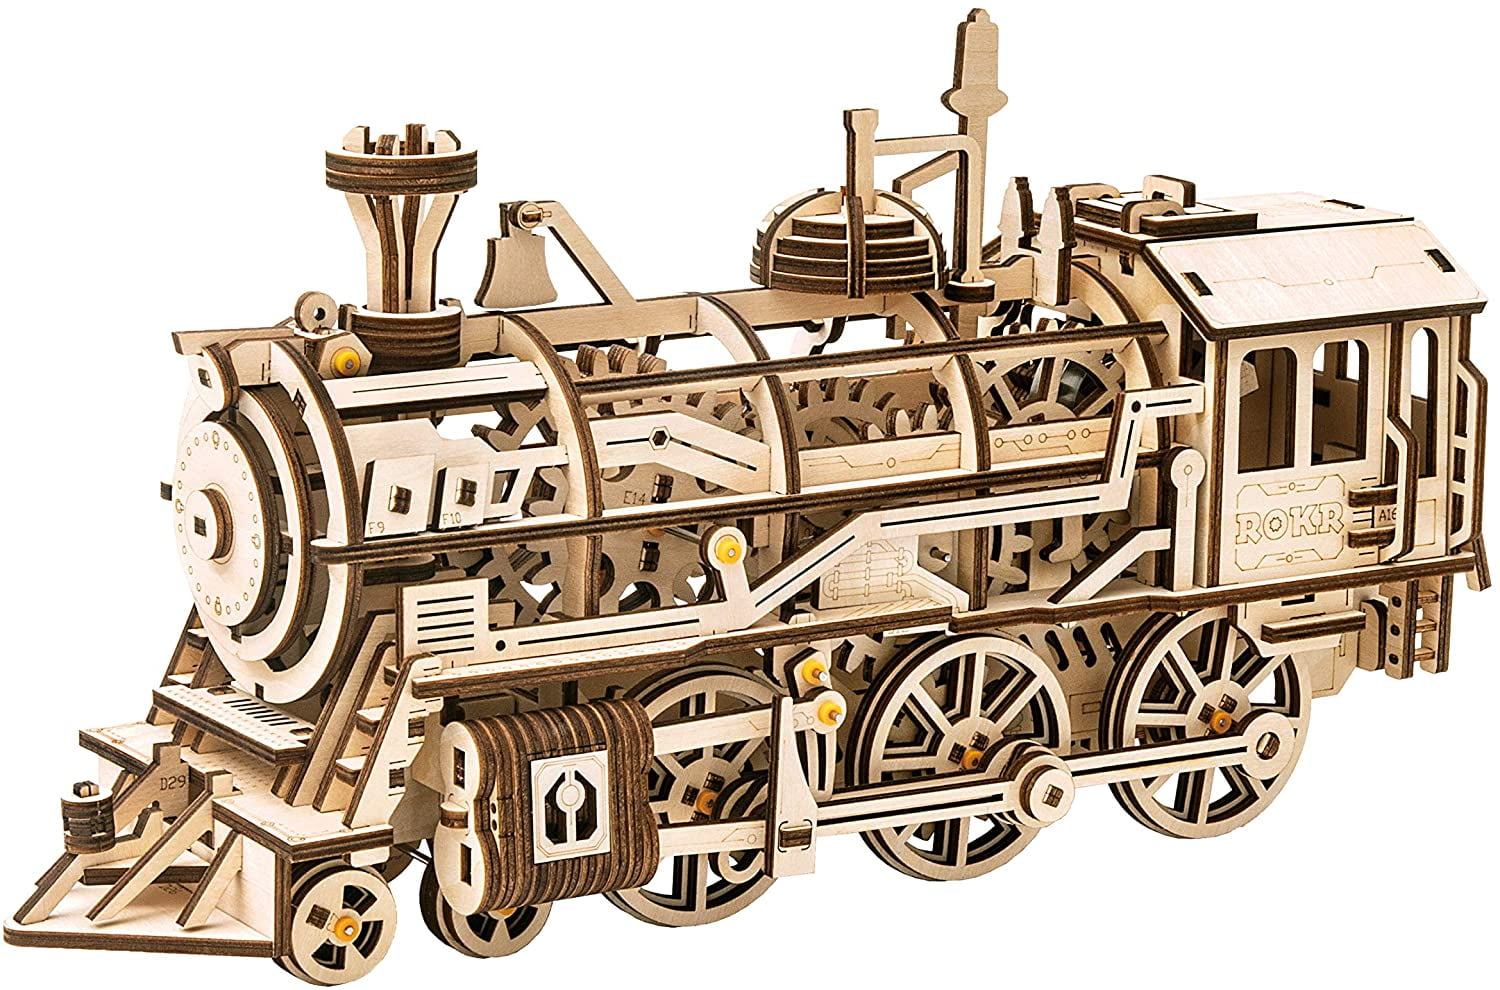 3d Assembly Model Puzzle Toy Wooden Locomotive Train Gift Robotime Rokr Diy Kits 